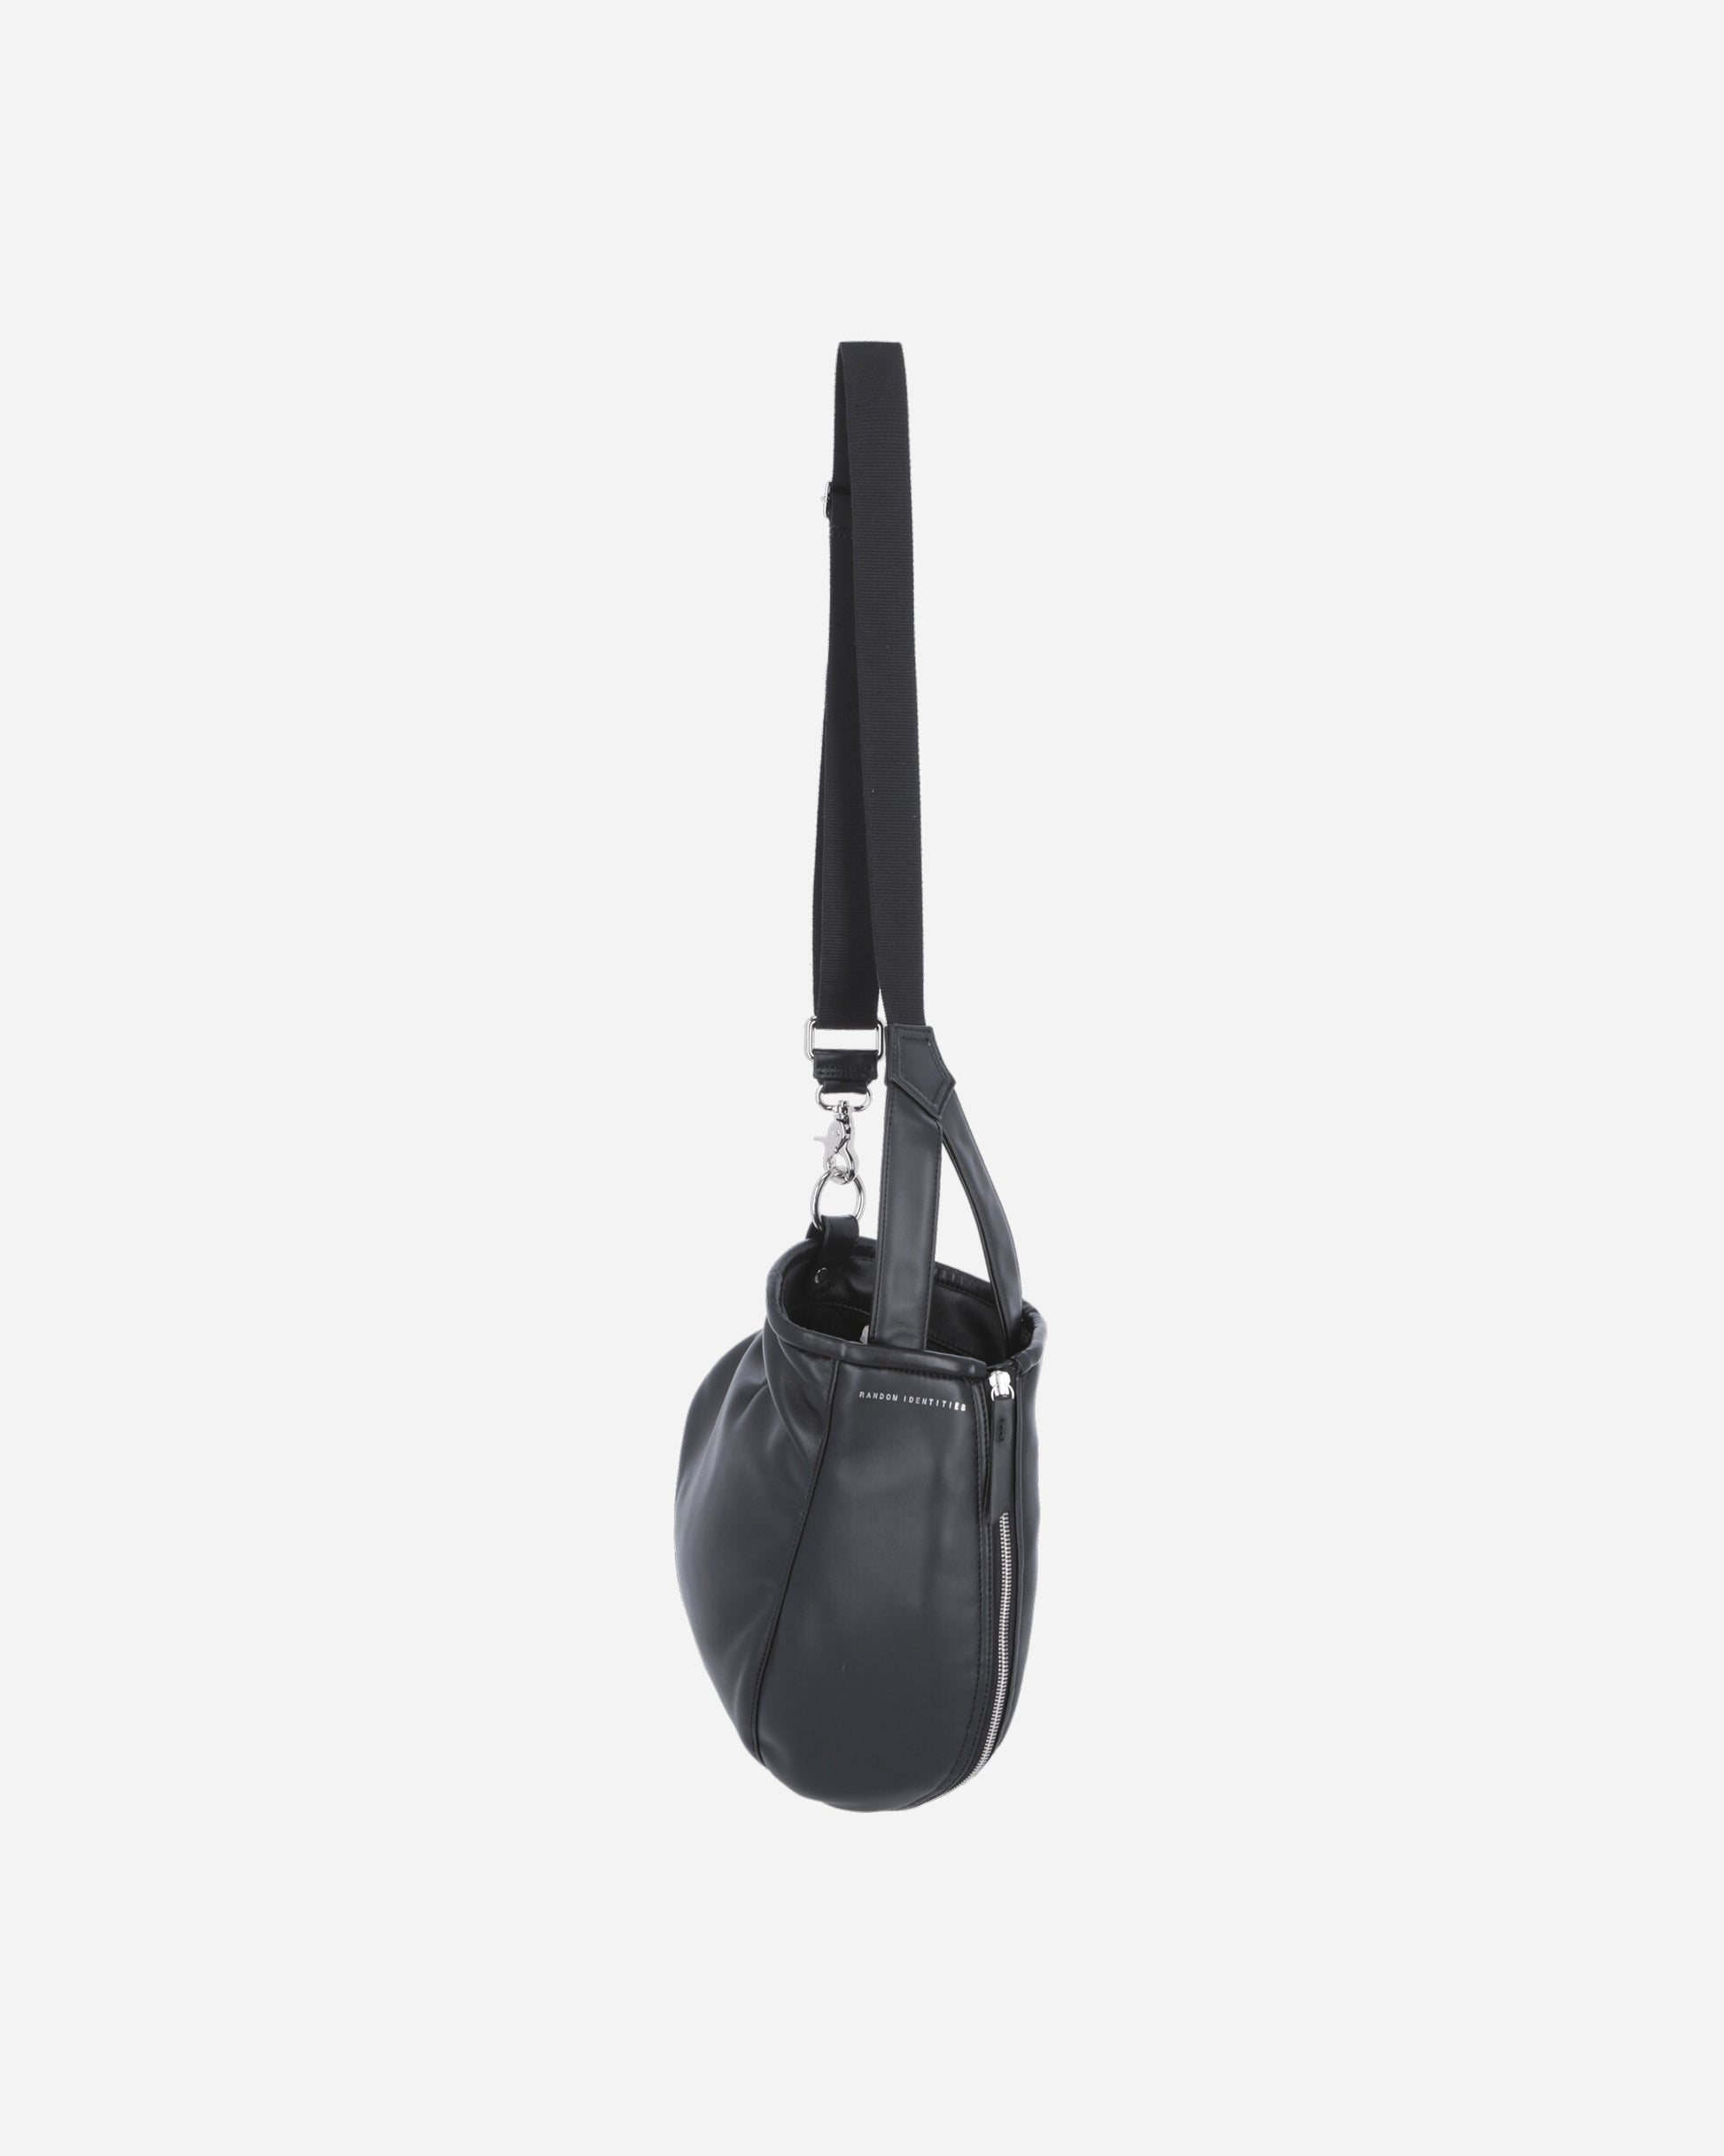 Random Identities Corset Mask Bag Black Bags and Backpacks Shoulder Bags RAN03K002 BLACK